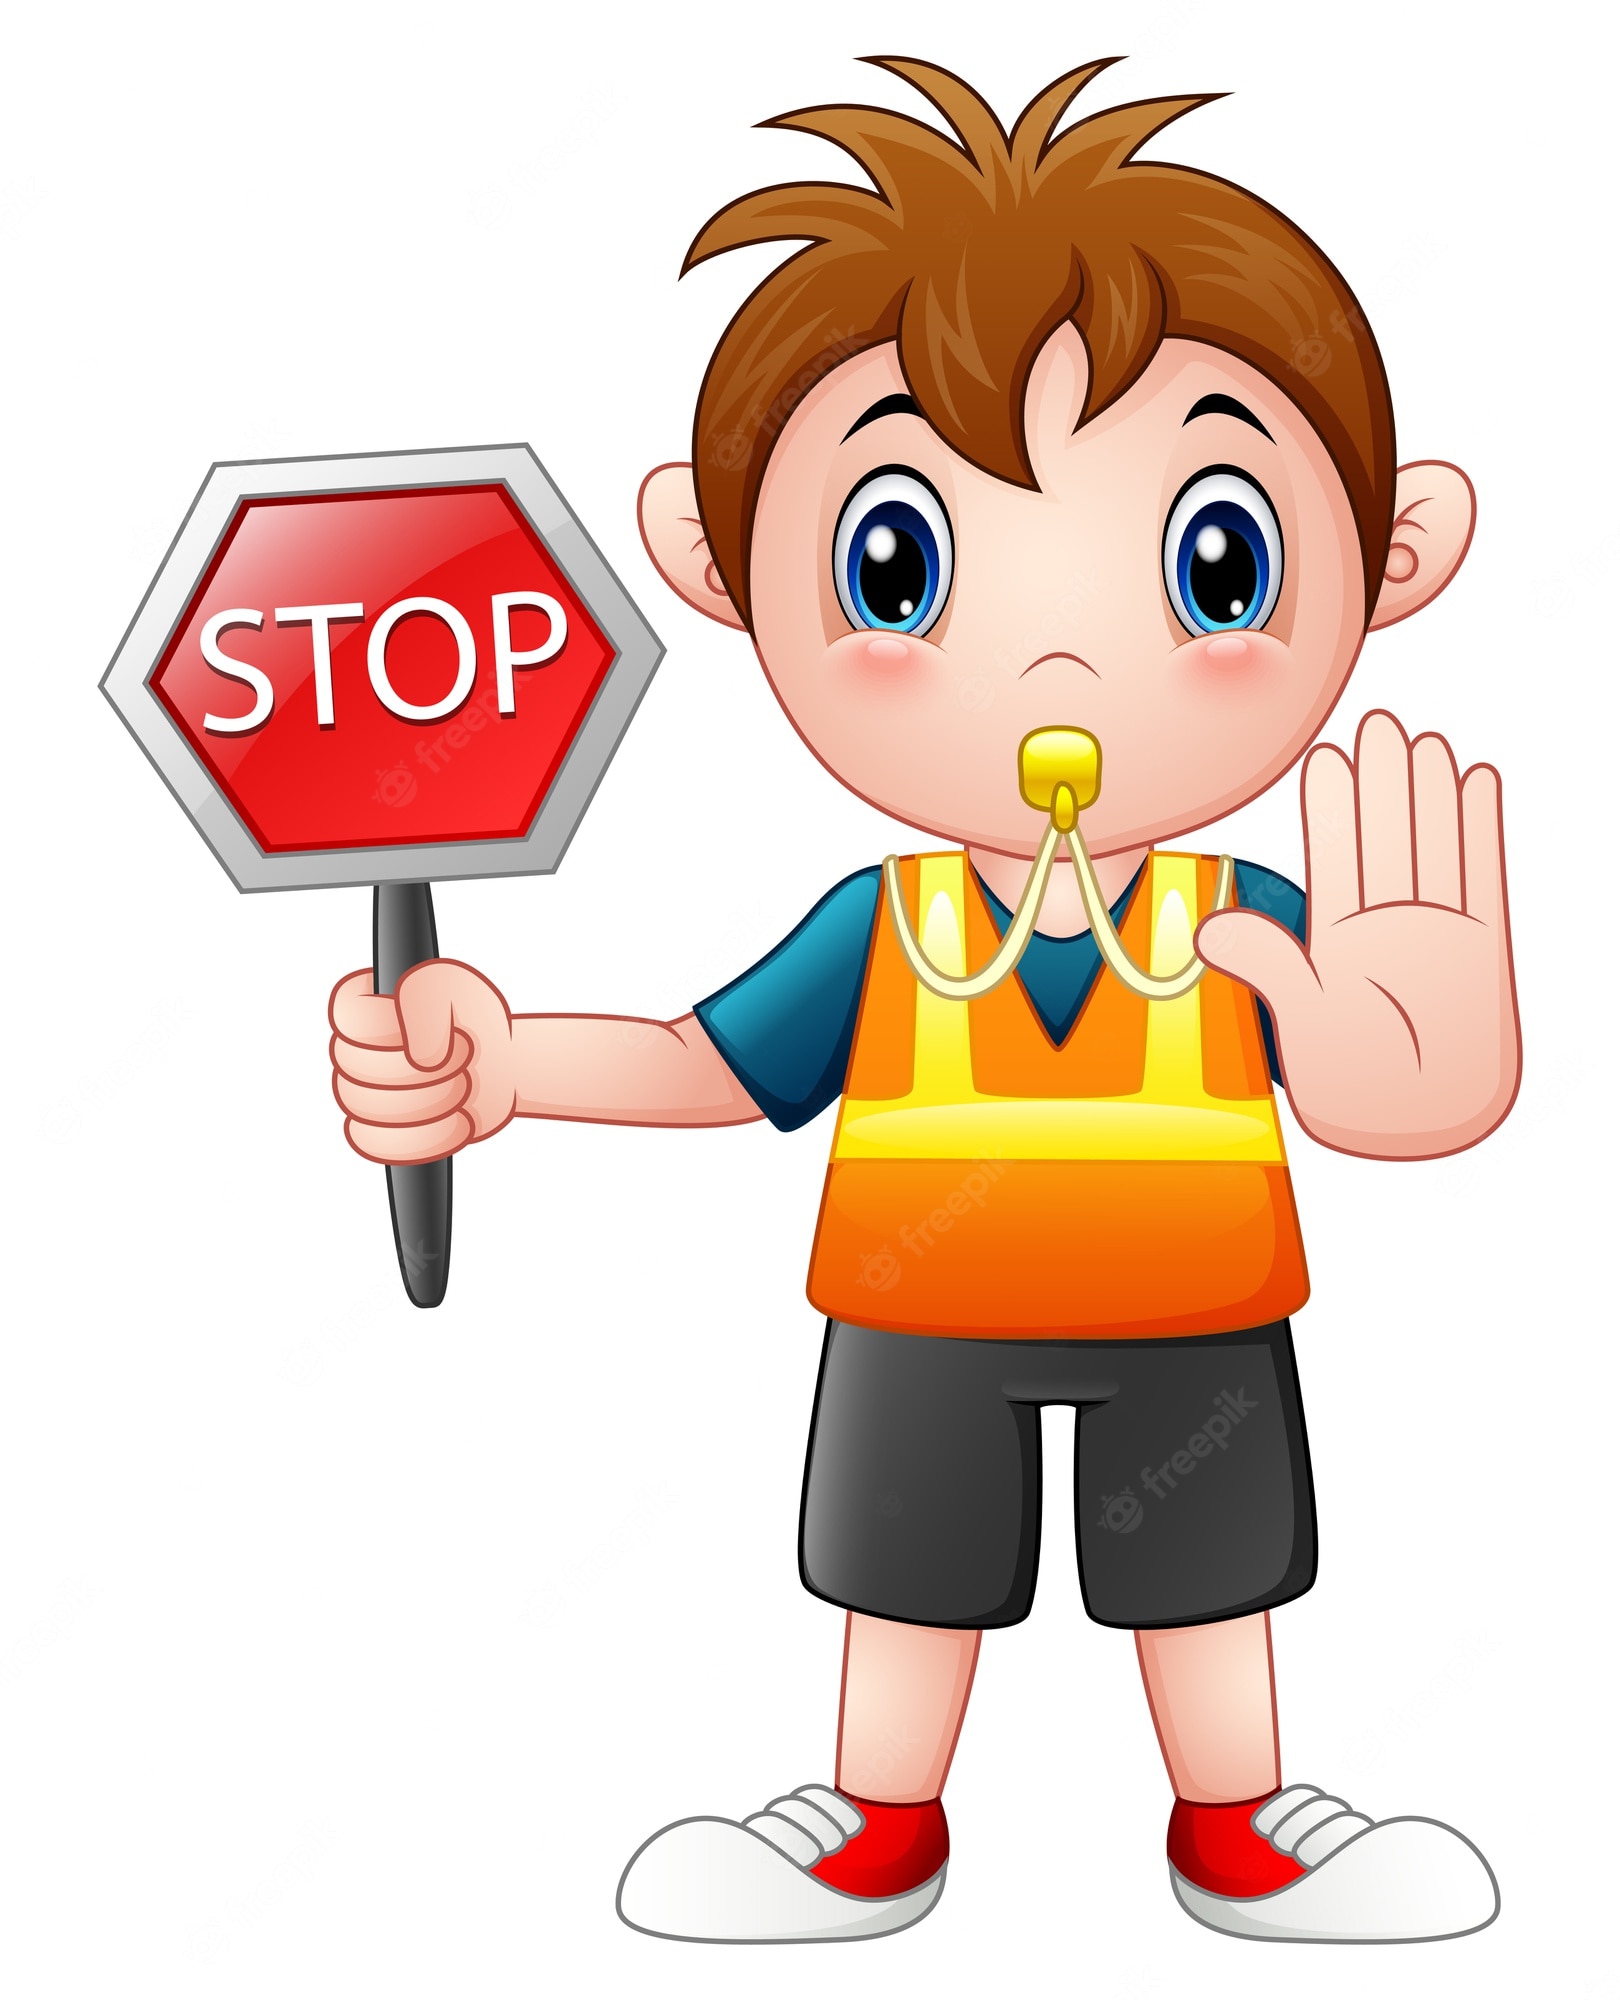 Stop Sign Clip Art at Clker.com - vector clip art online, royalty ...